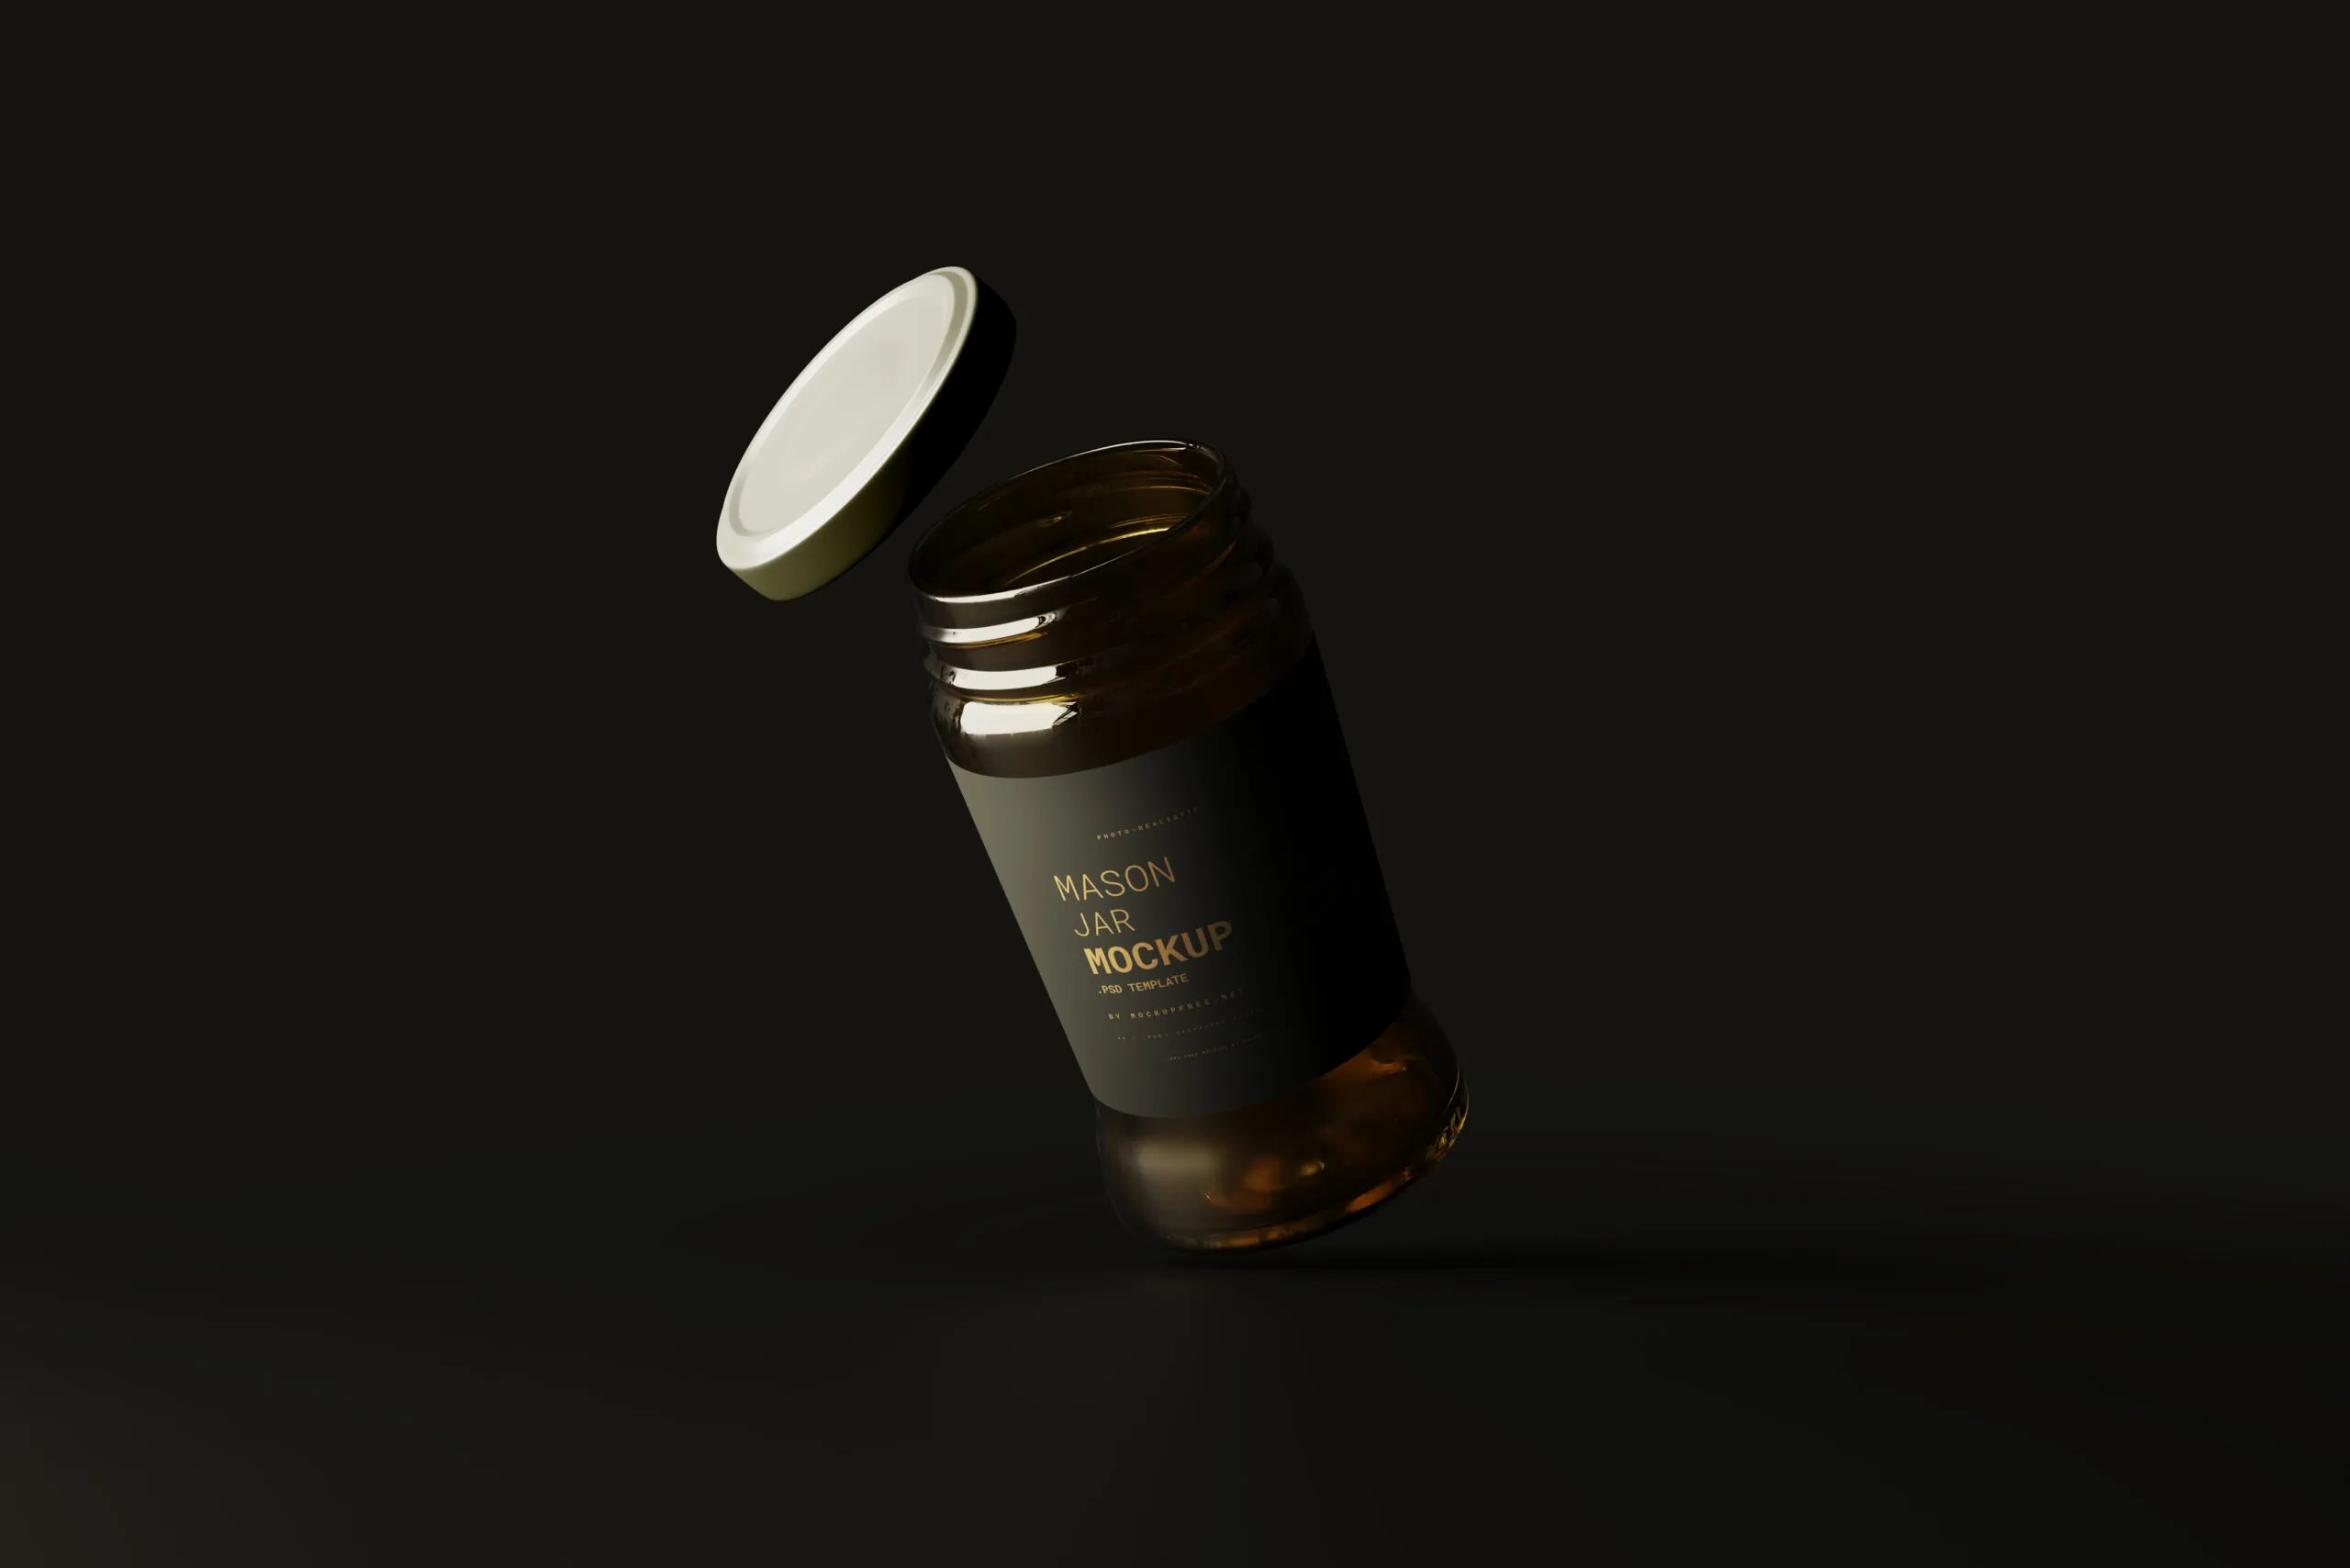 5 Amber Glass Jar Mockups in Distinct Visions FREE PSD